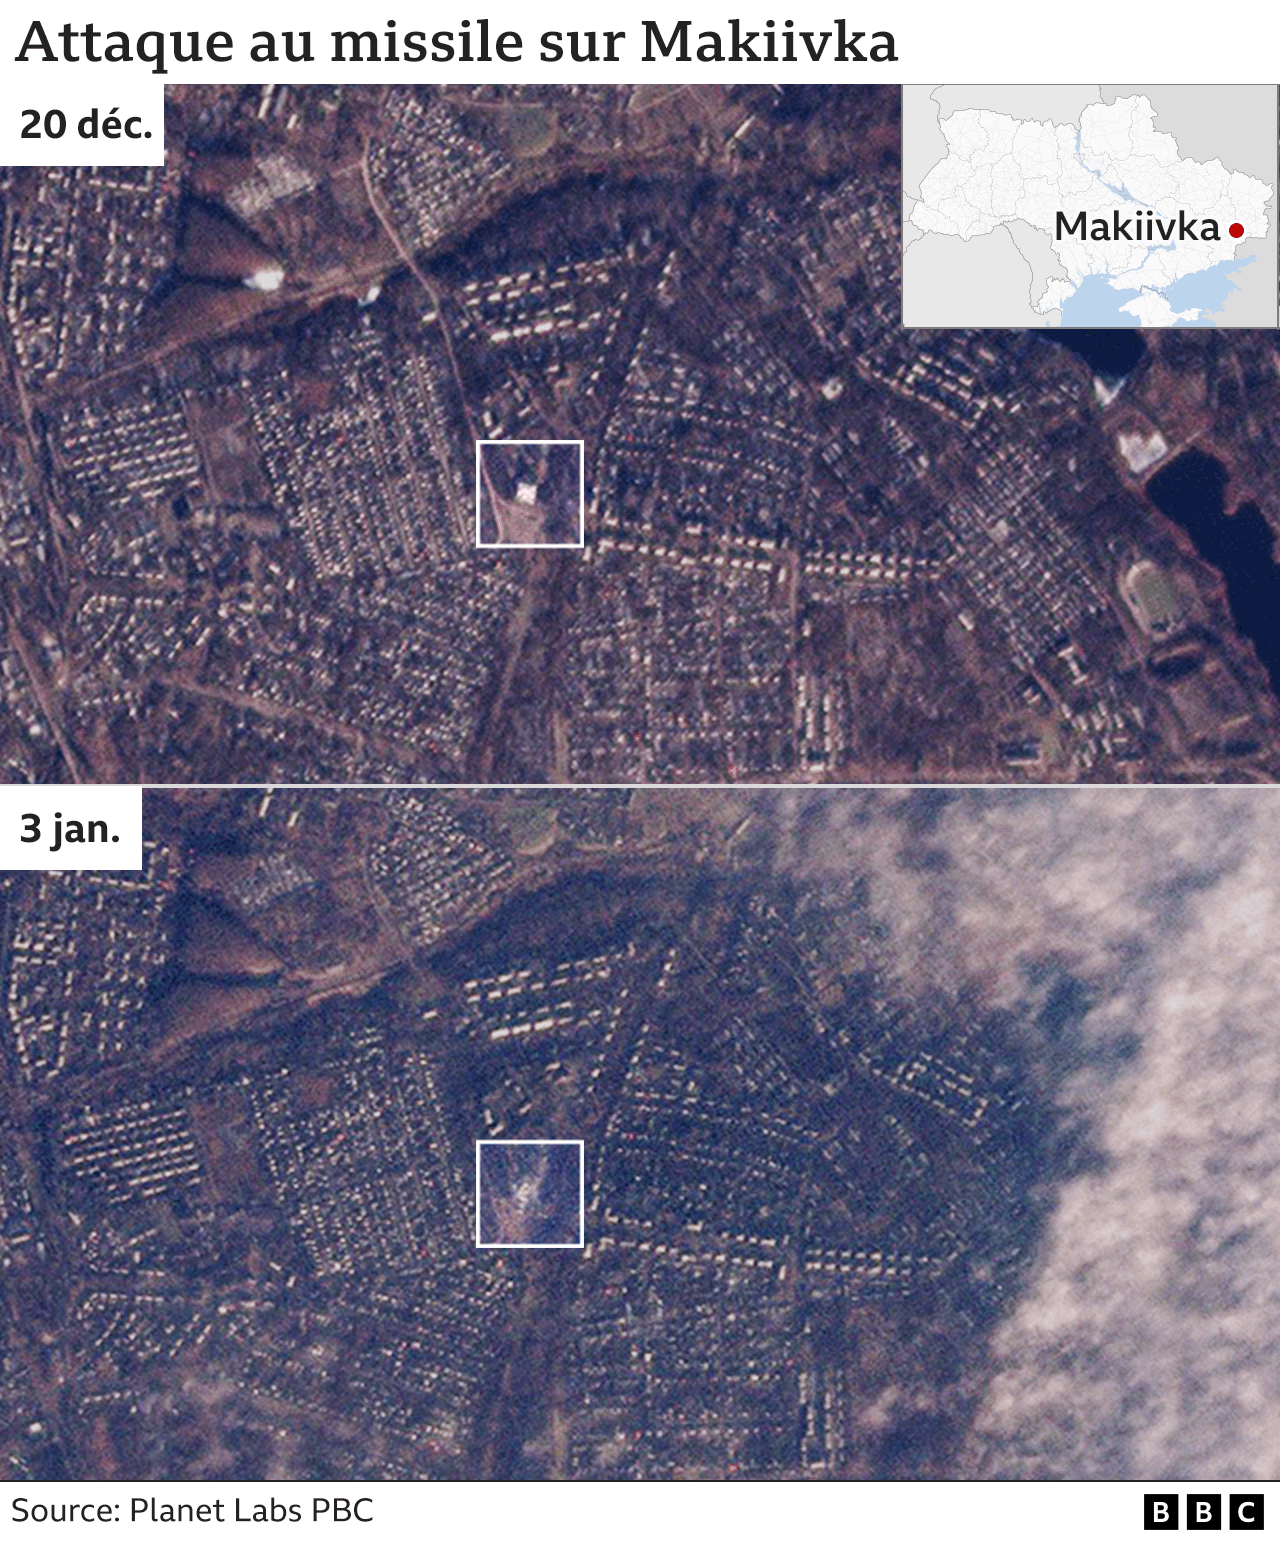 Missile attack on Makivka.